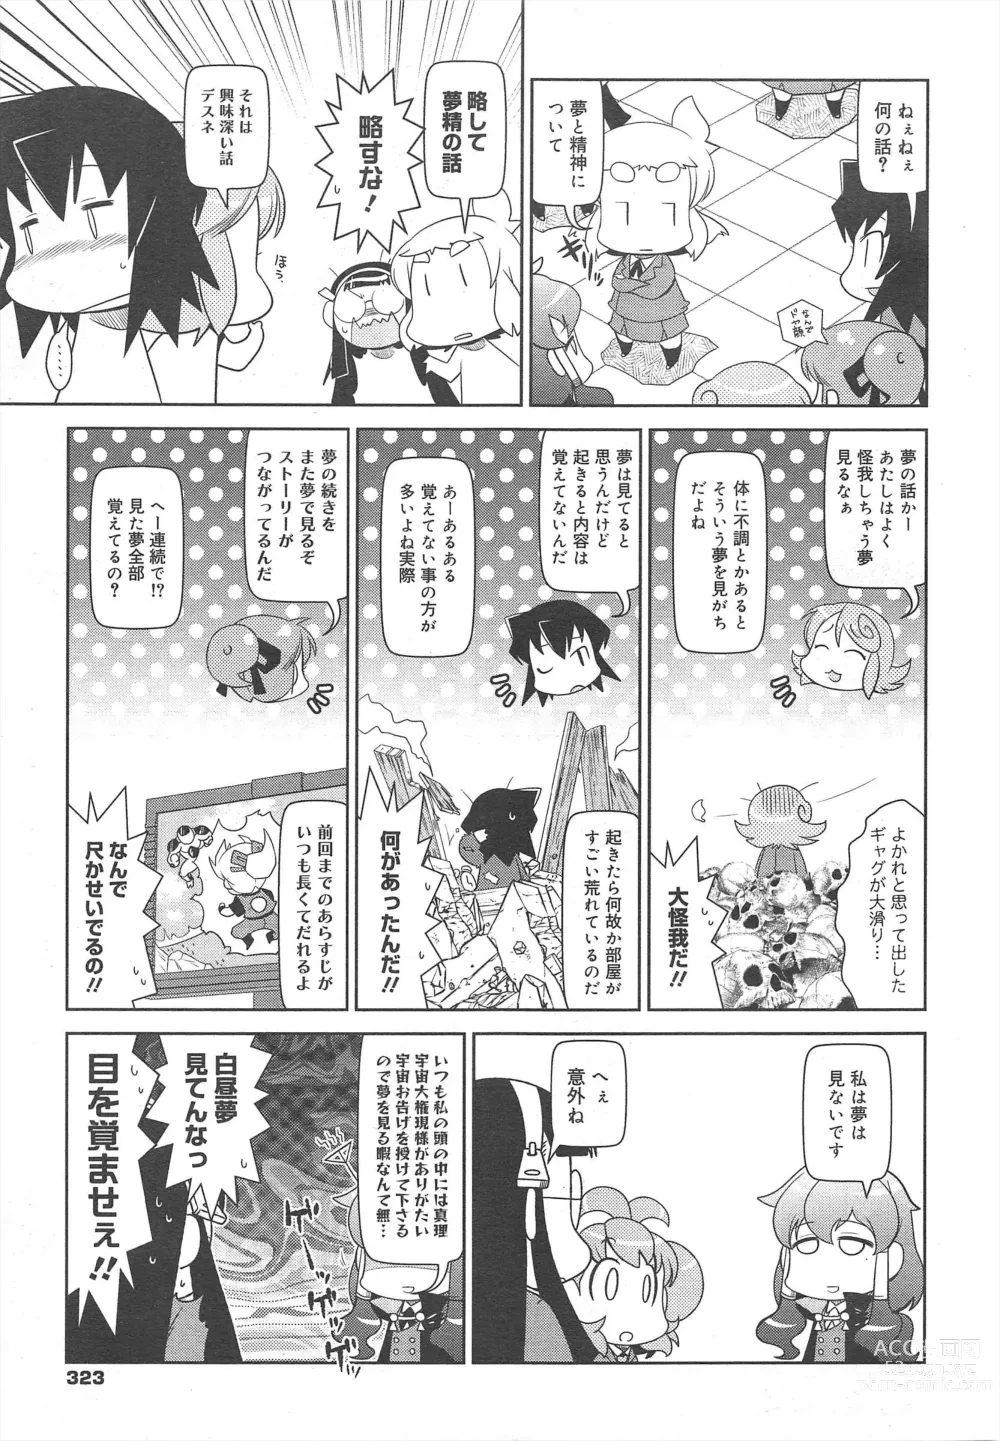 Page 323 of manga COMIC Megamilk 2012-04 Vol.22